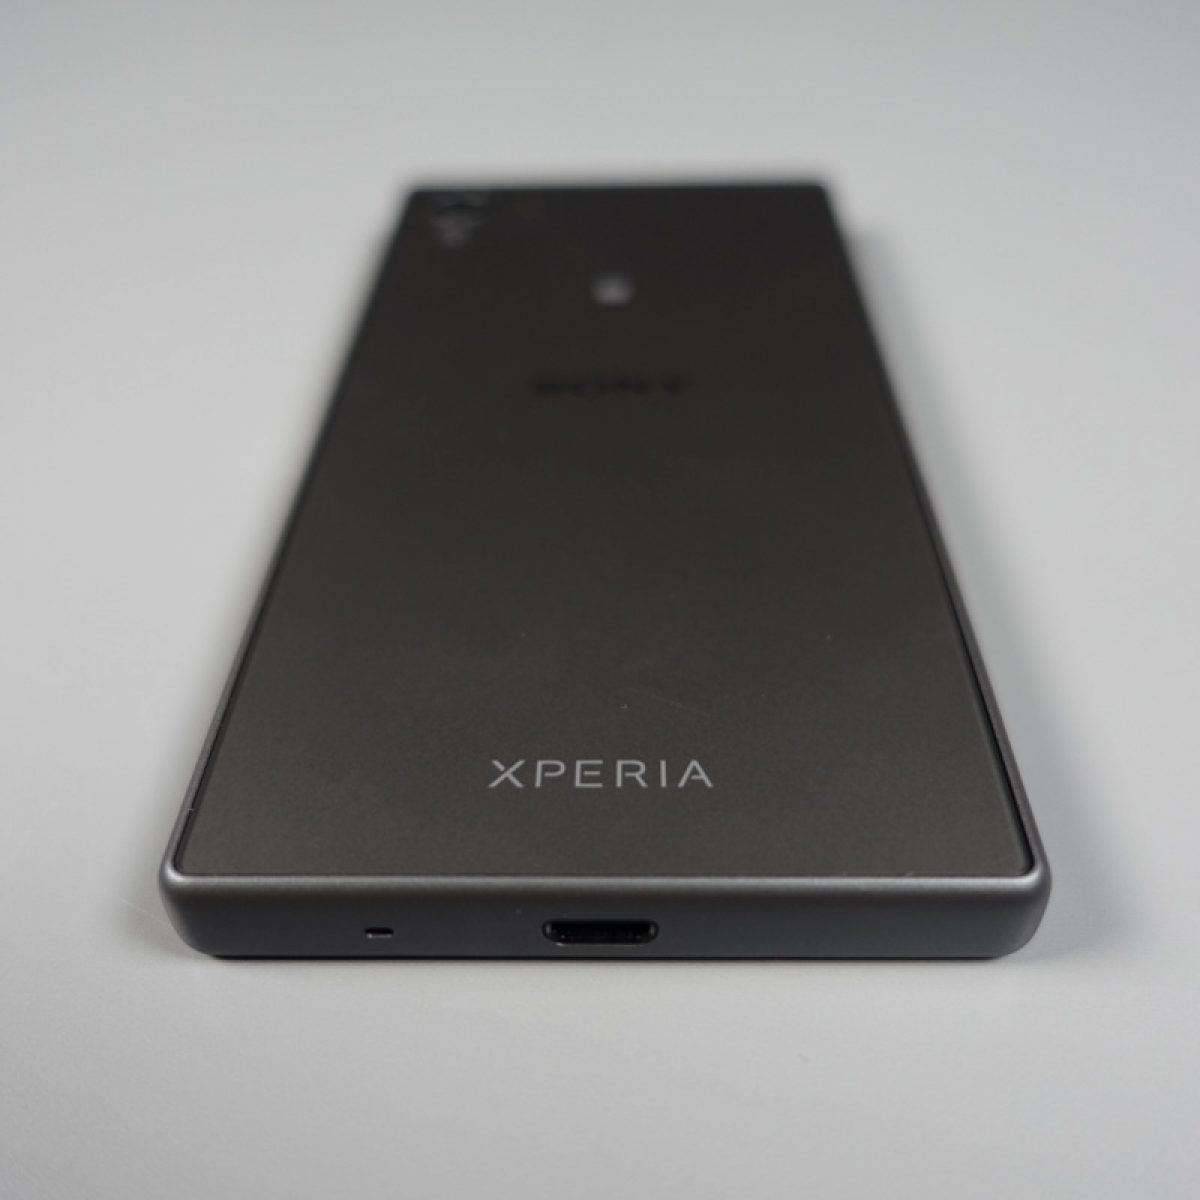 litteken Vervorming Ellendig Sony Xperia Z5 Compact First Look and Tour!